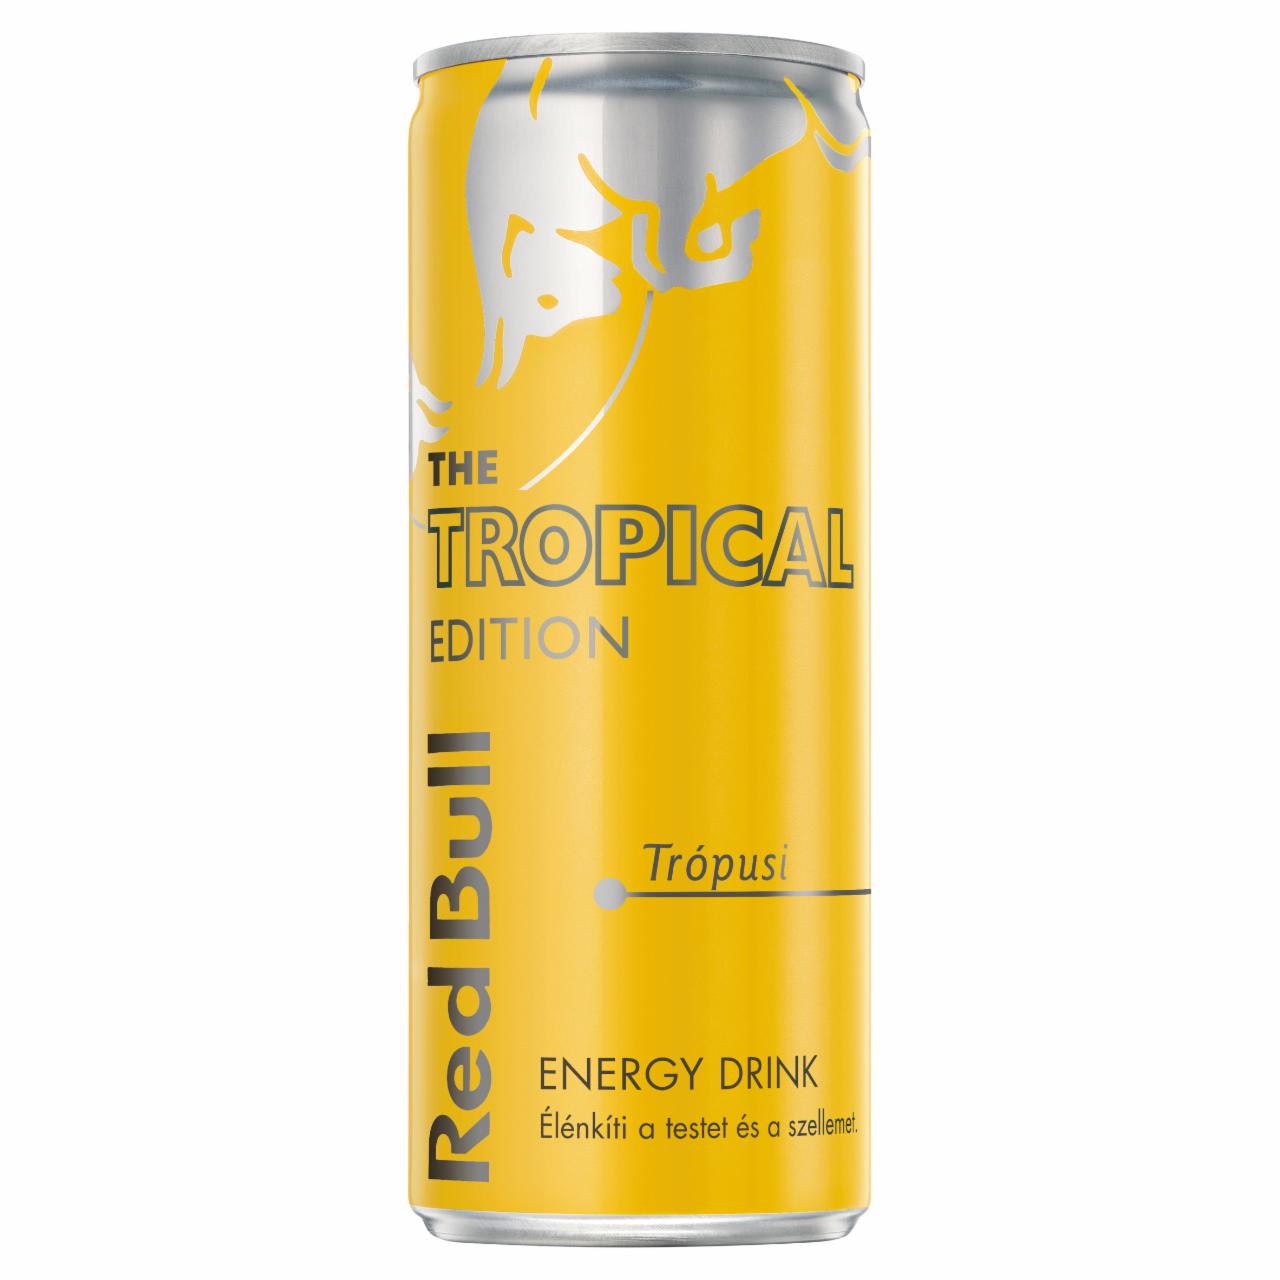 Képek - Red Bull The Tropical Edition energiaital trópusi ízesítéssel 250 ml